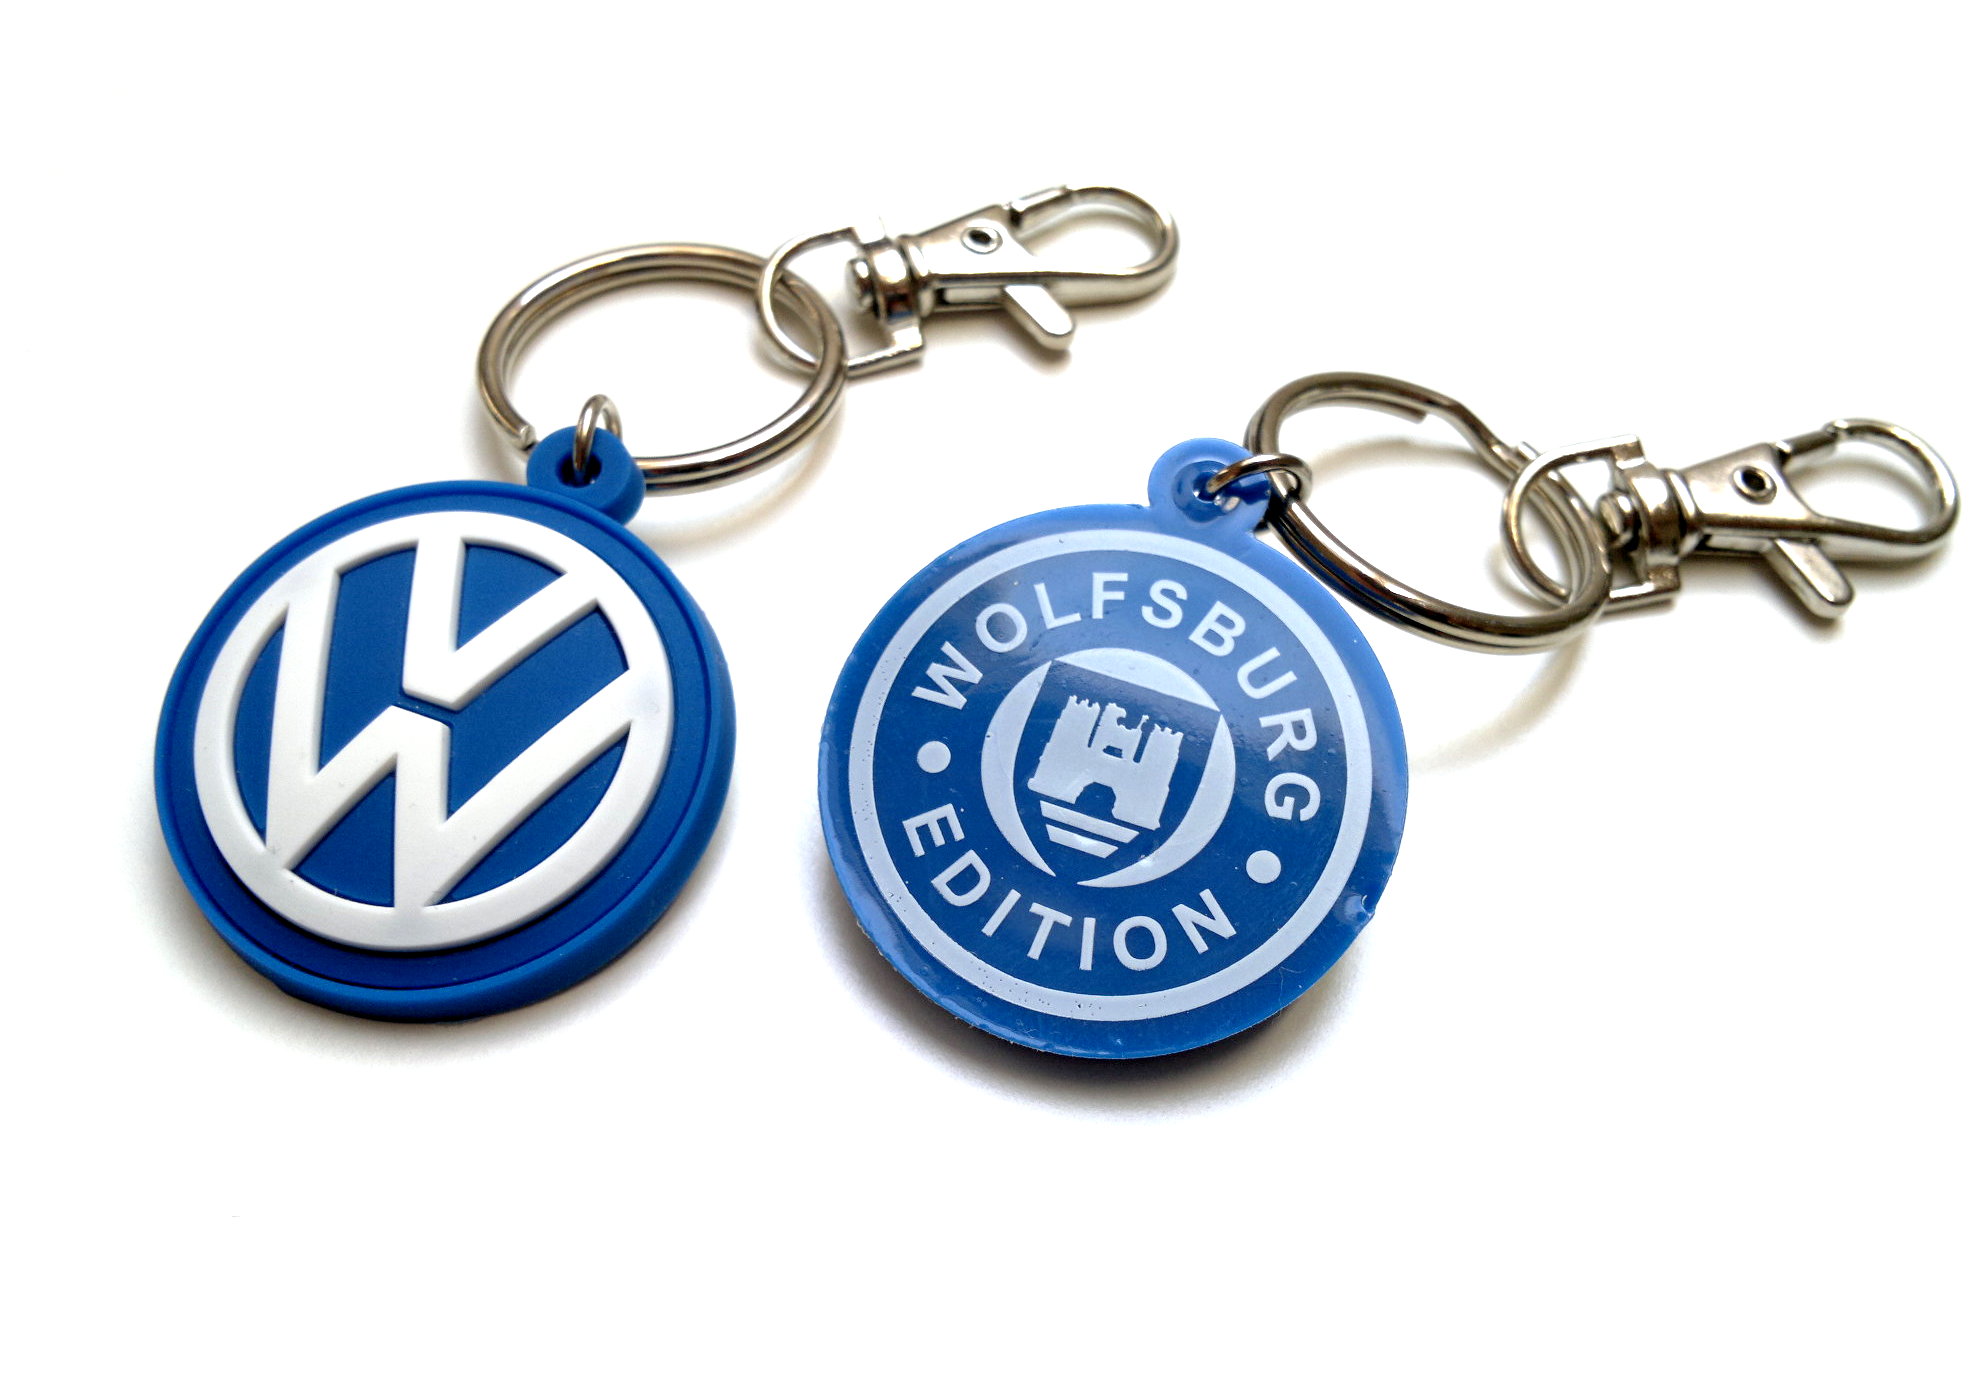 Брелок volkswagen. Volkswagen Golf брелок. Брелок GTI Golf. Volkswagen Key брелок. Брелок на ключи Фольксваген гольф 3.